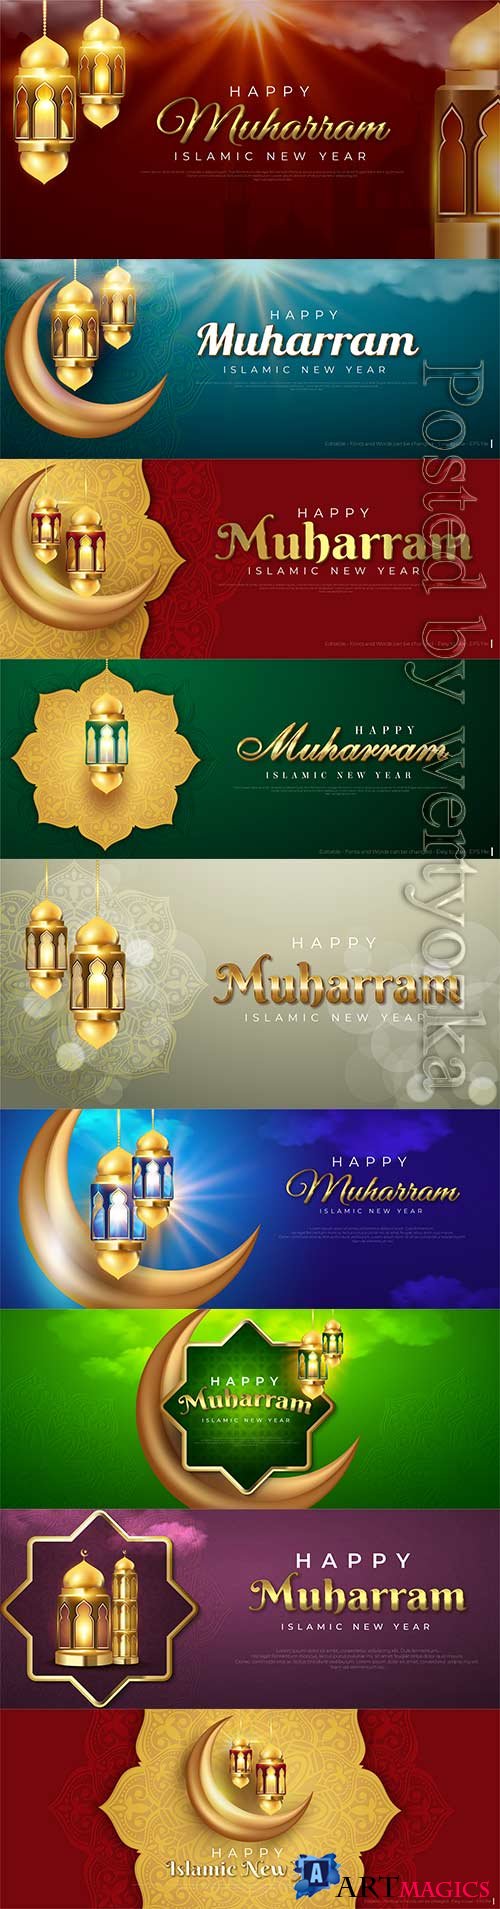 Islamic new year happy muharram celebration banner with islamic golden lantern